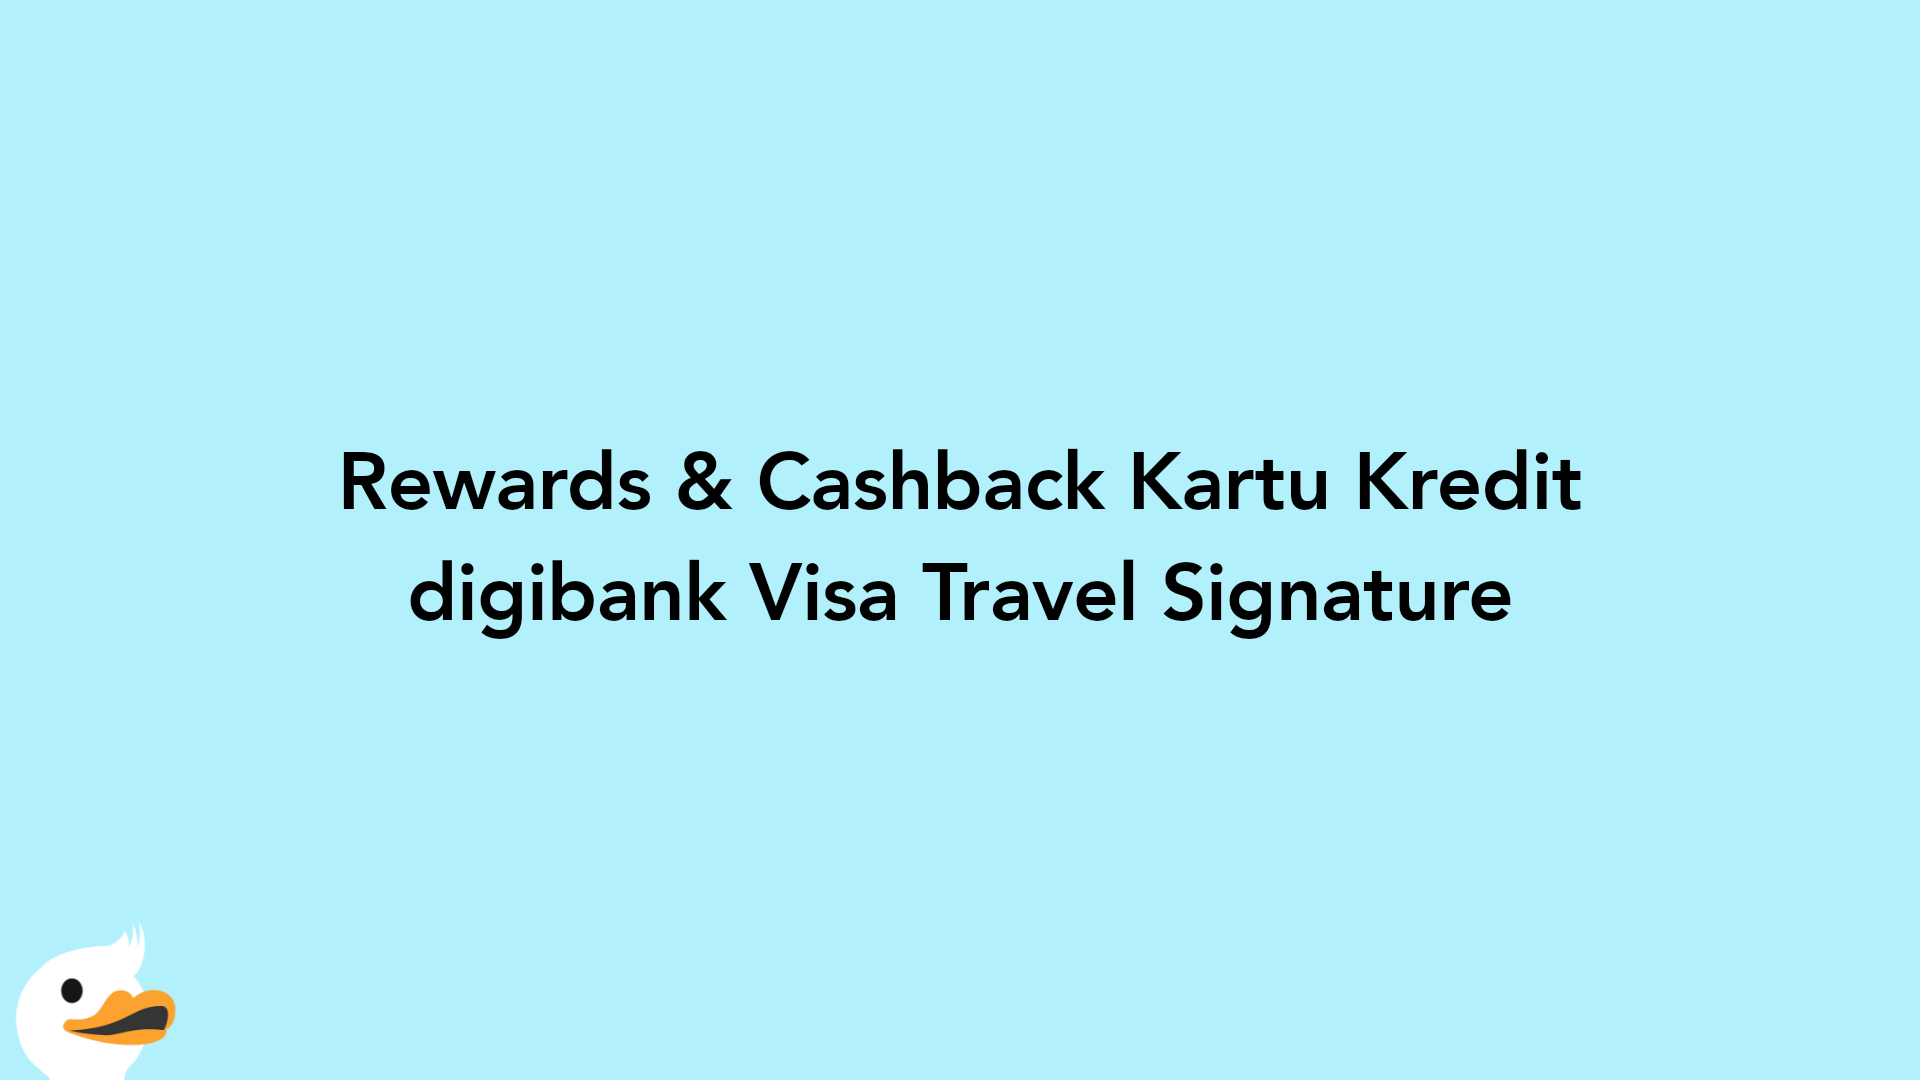 Rewards & Cashback Kartu Kredit digibank Visa Travel Signature